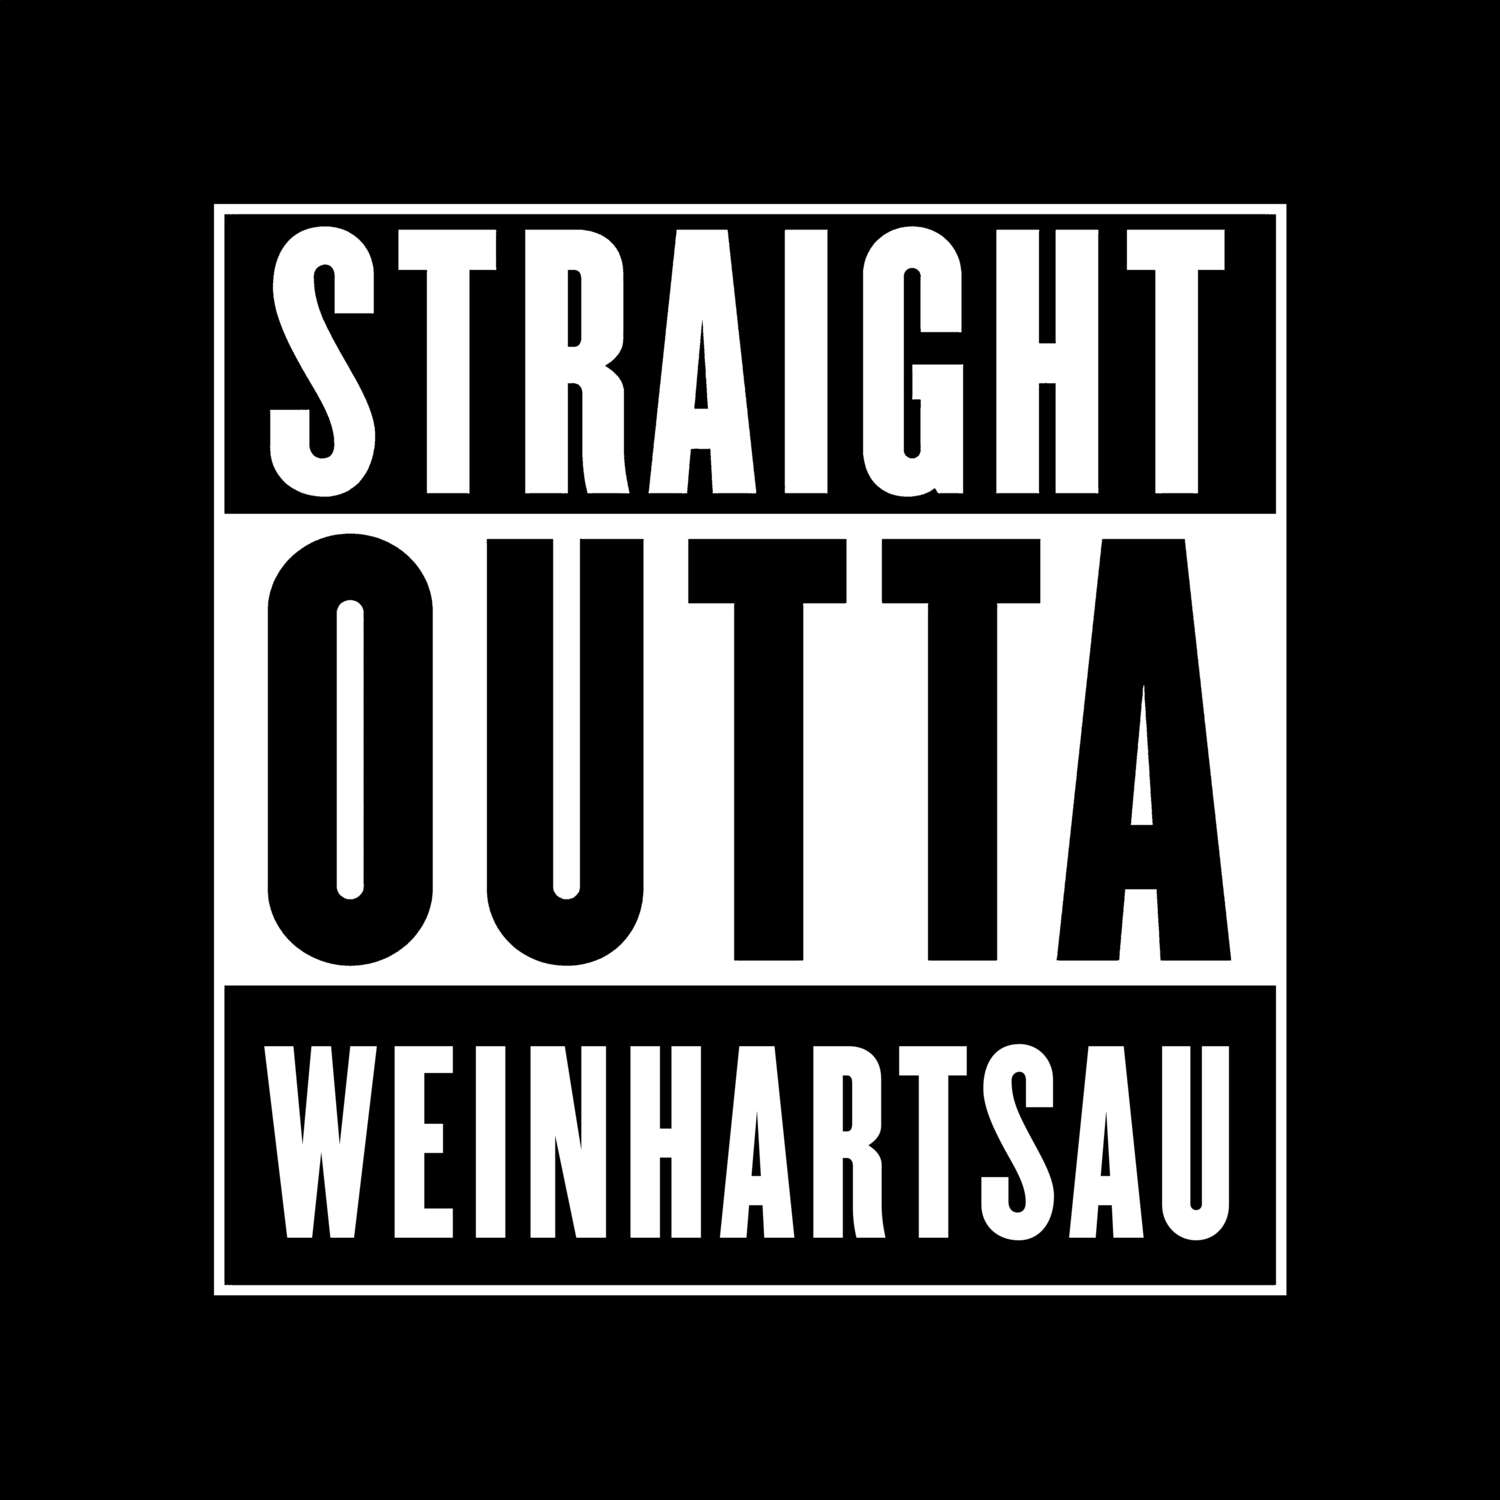 Weinhartsau T-Shirt »Straight Outta«